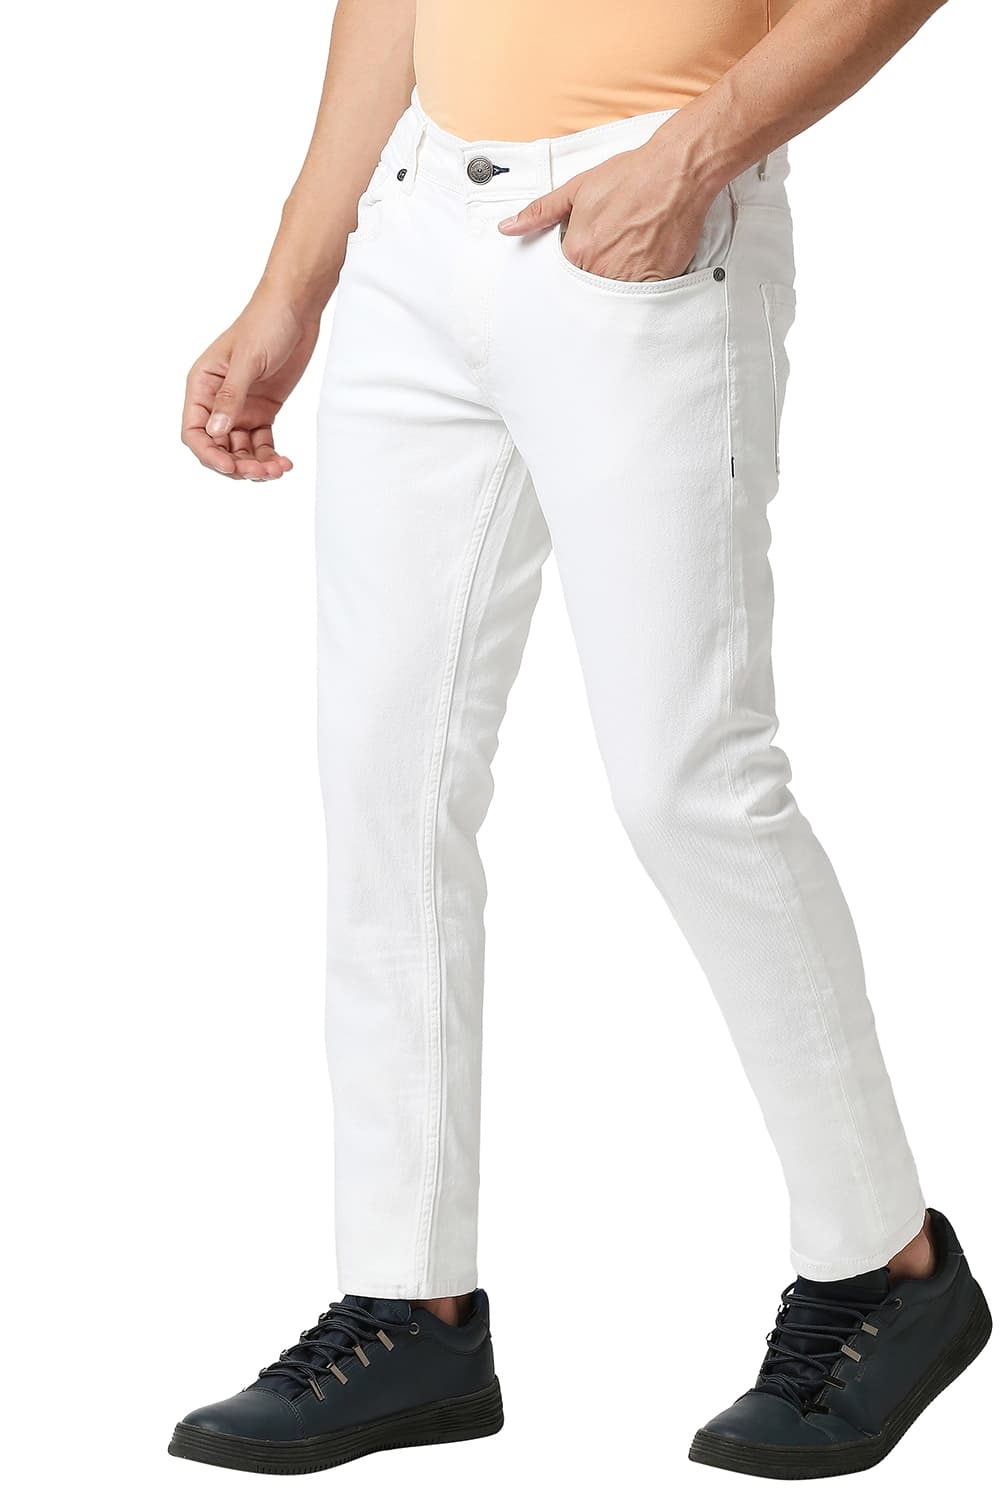 Basics | Men's White Cotton Blend Solid Jeans 3